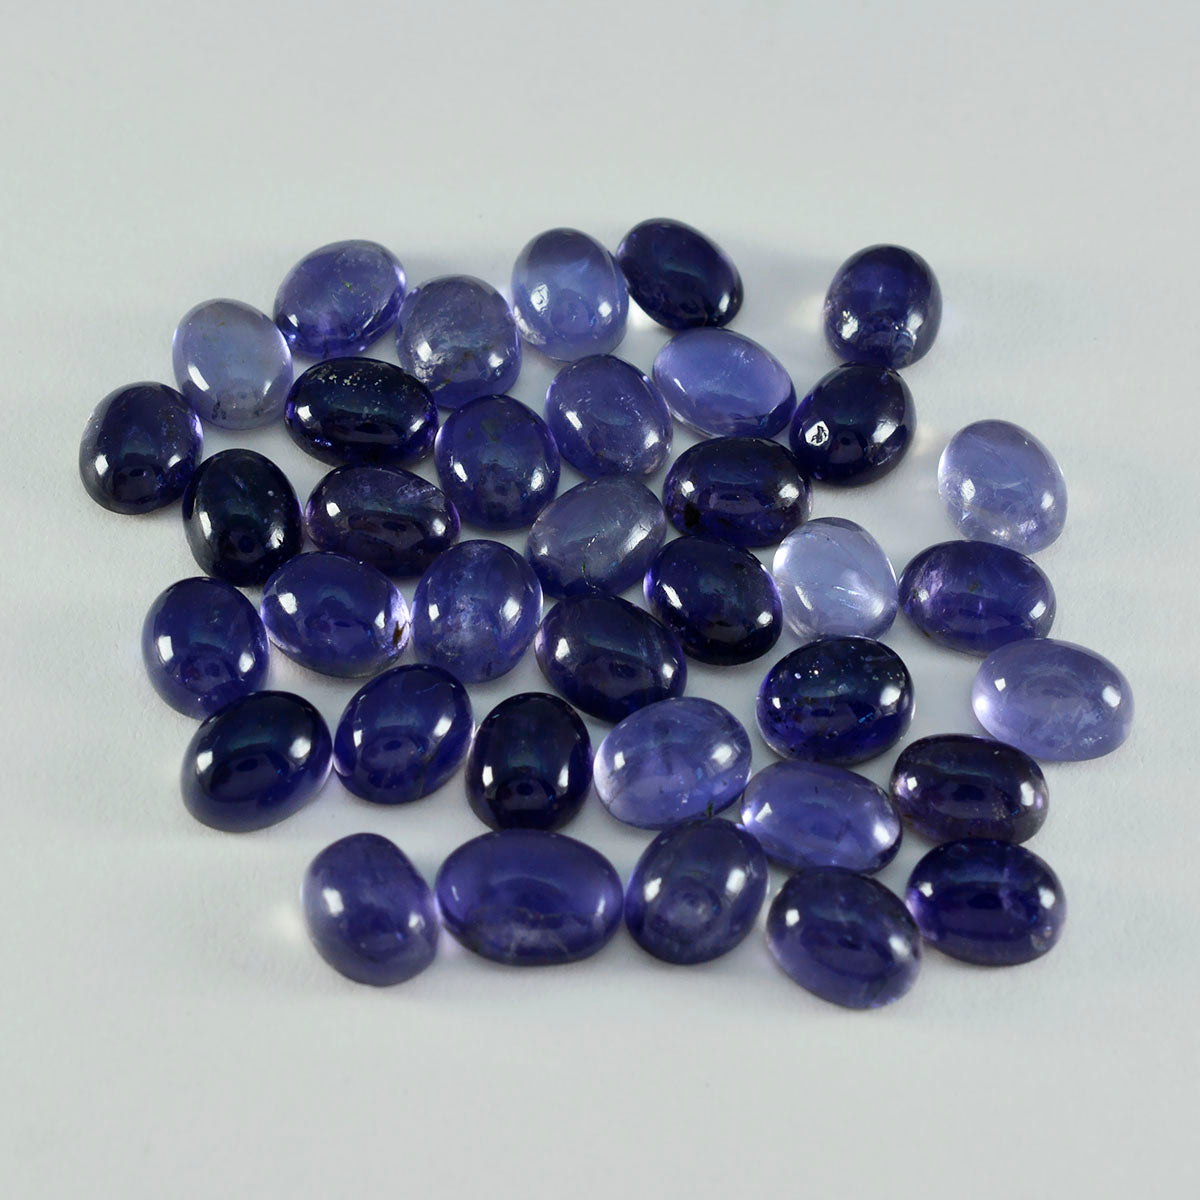 Riyogems 1PC Blue Iolite Cabochon 6x8 mm Oval Shape excellent Quality Stone